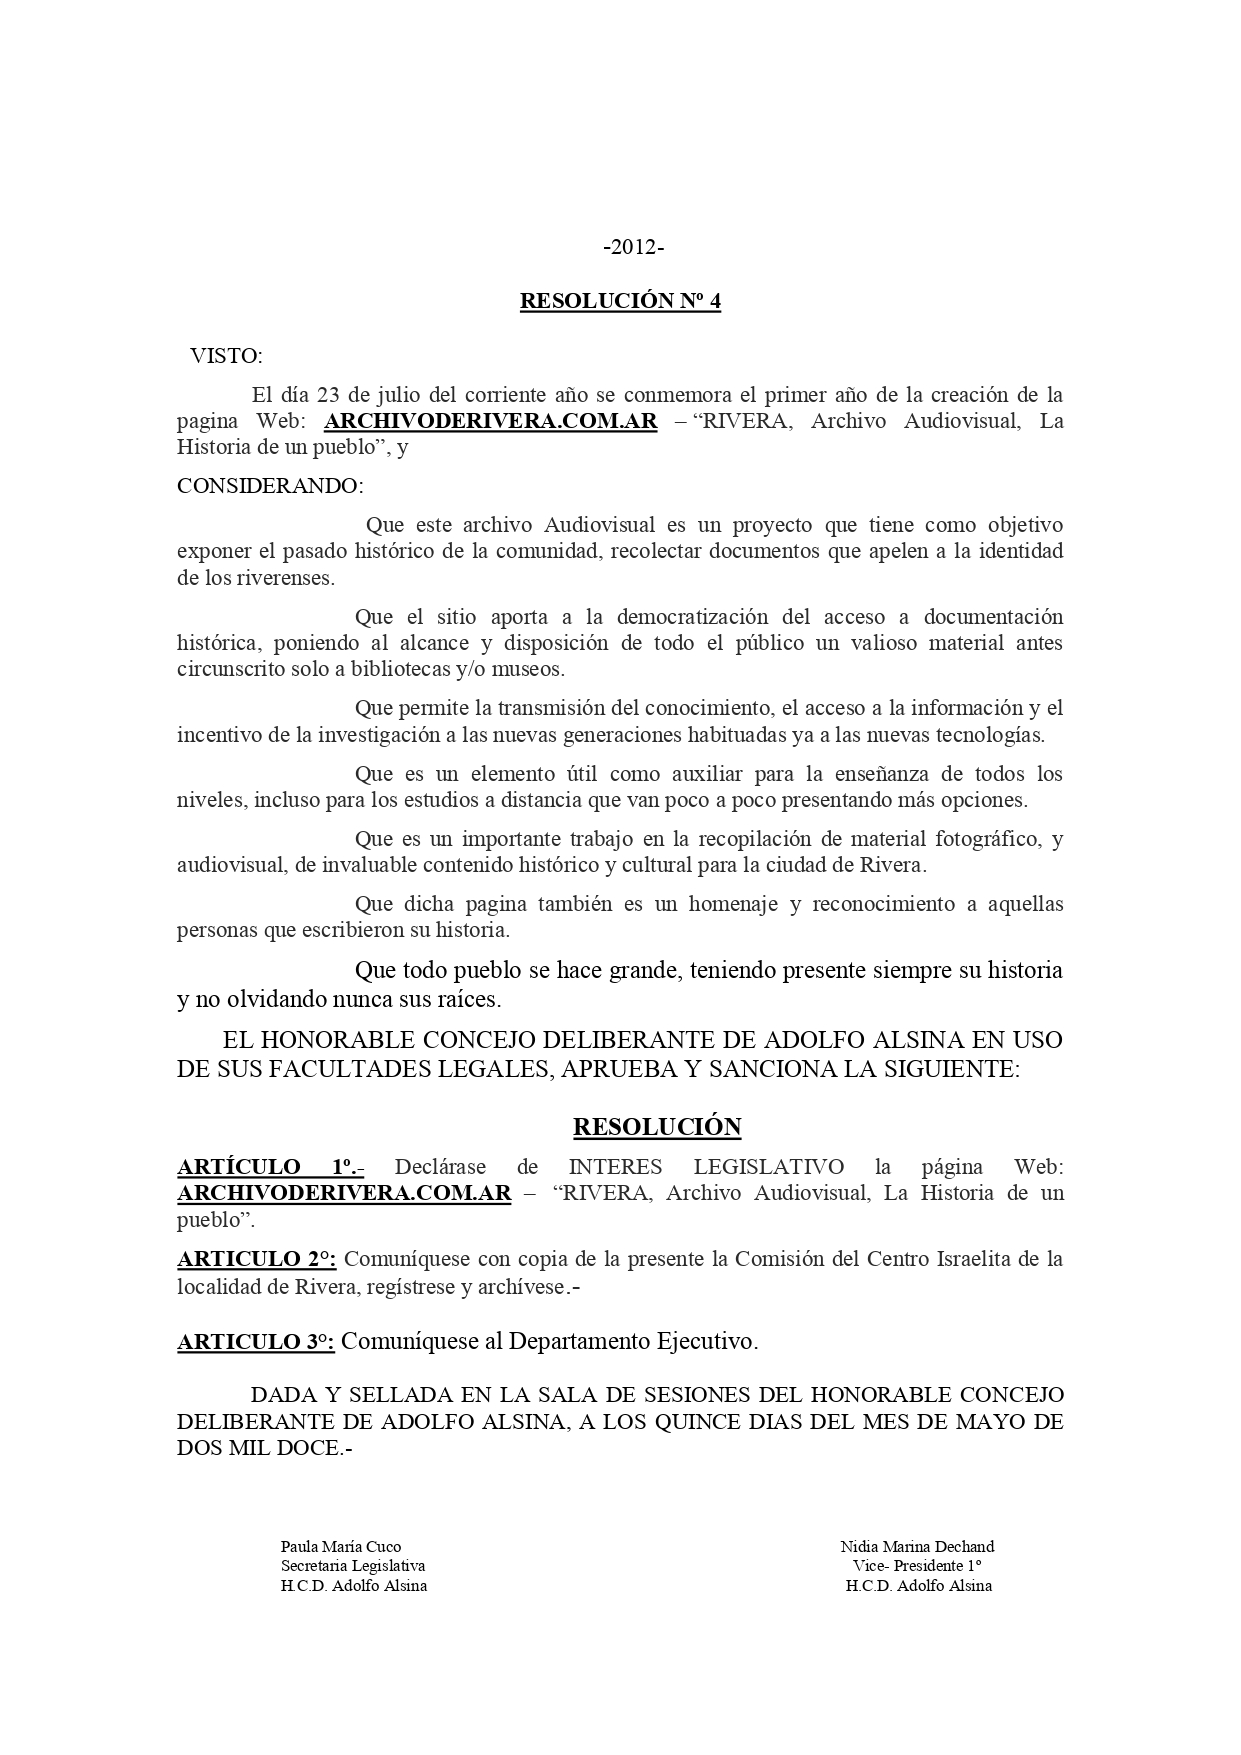 Int. Legislat. Pag. Web Rivera page 0001